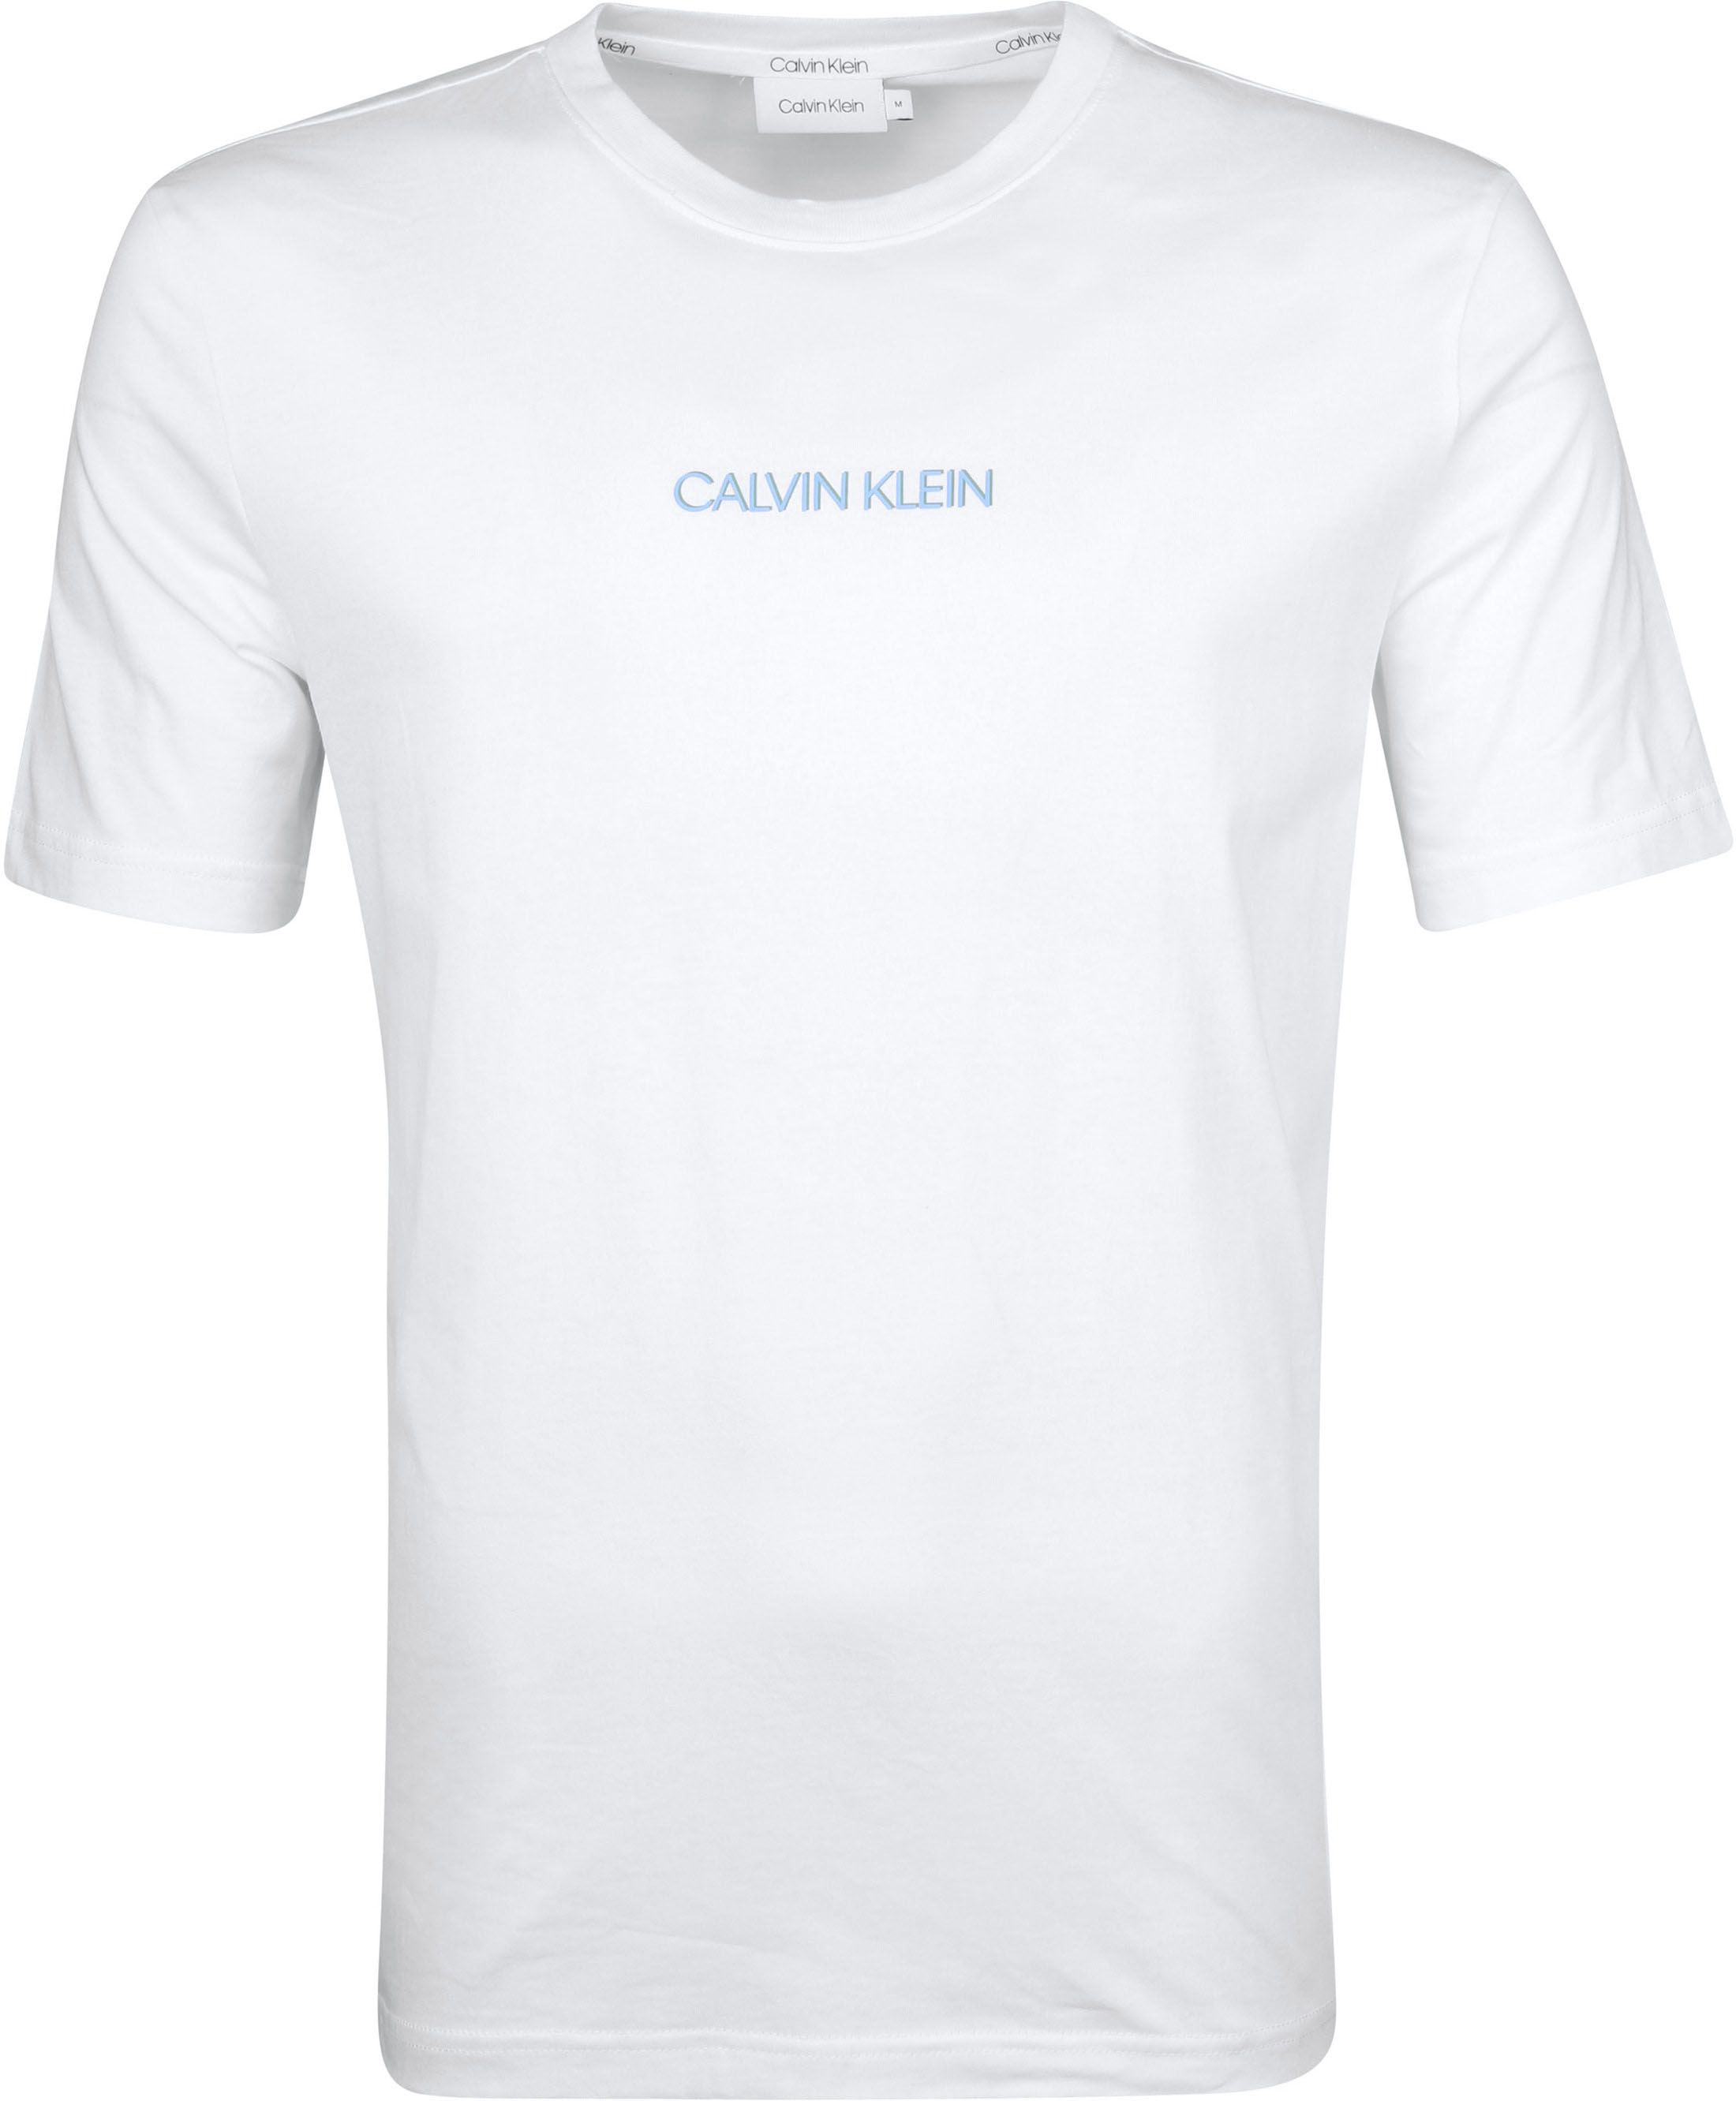 Calvin Klein T-Shirt Shadow Logo White size L